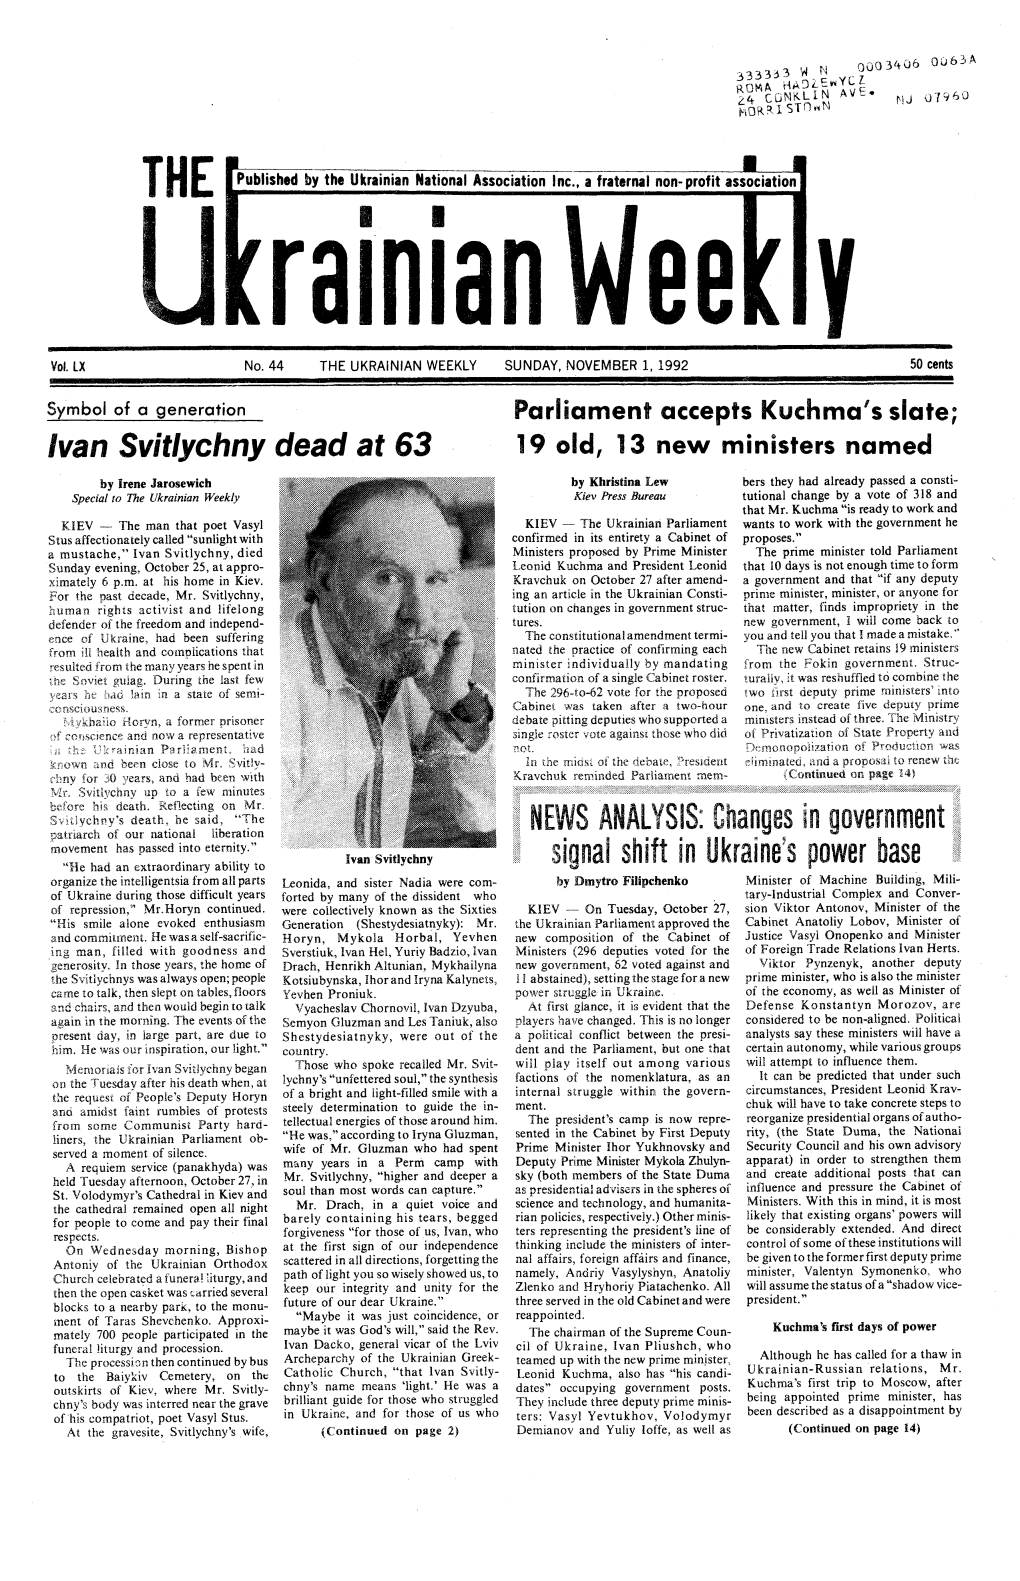 The Ukrainian Weekly 1992-44.Pdf